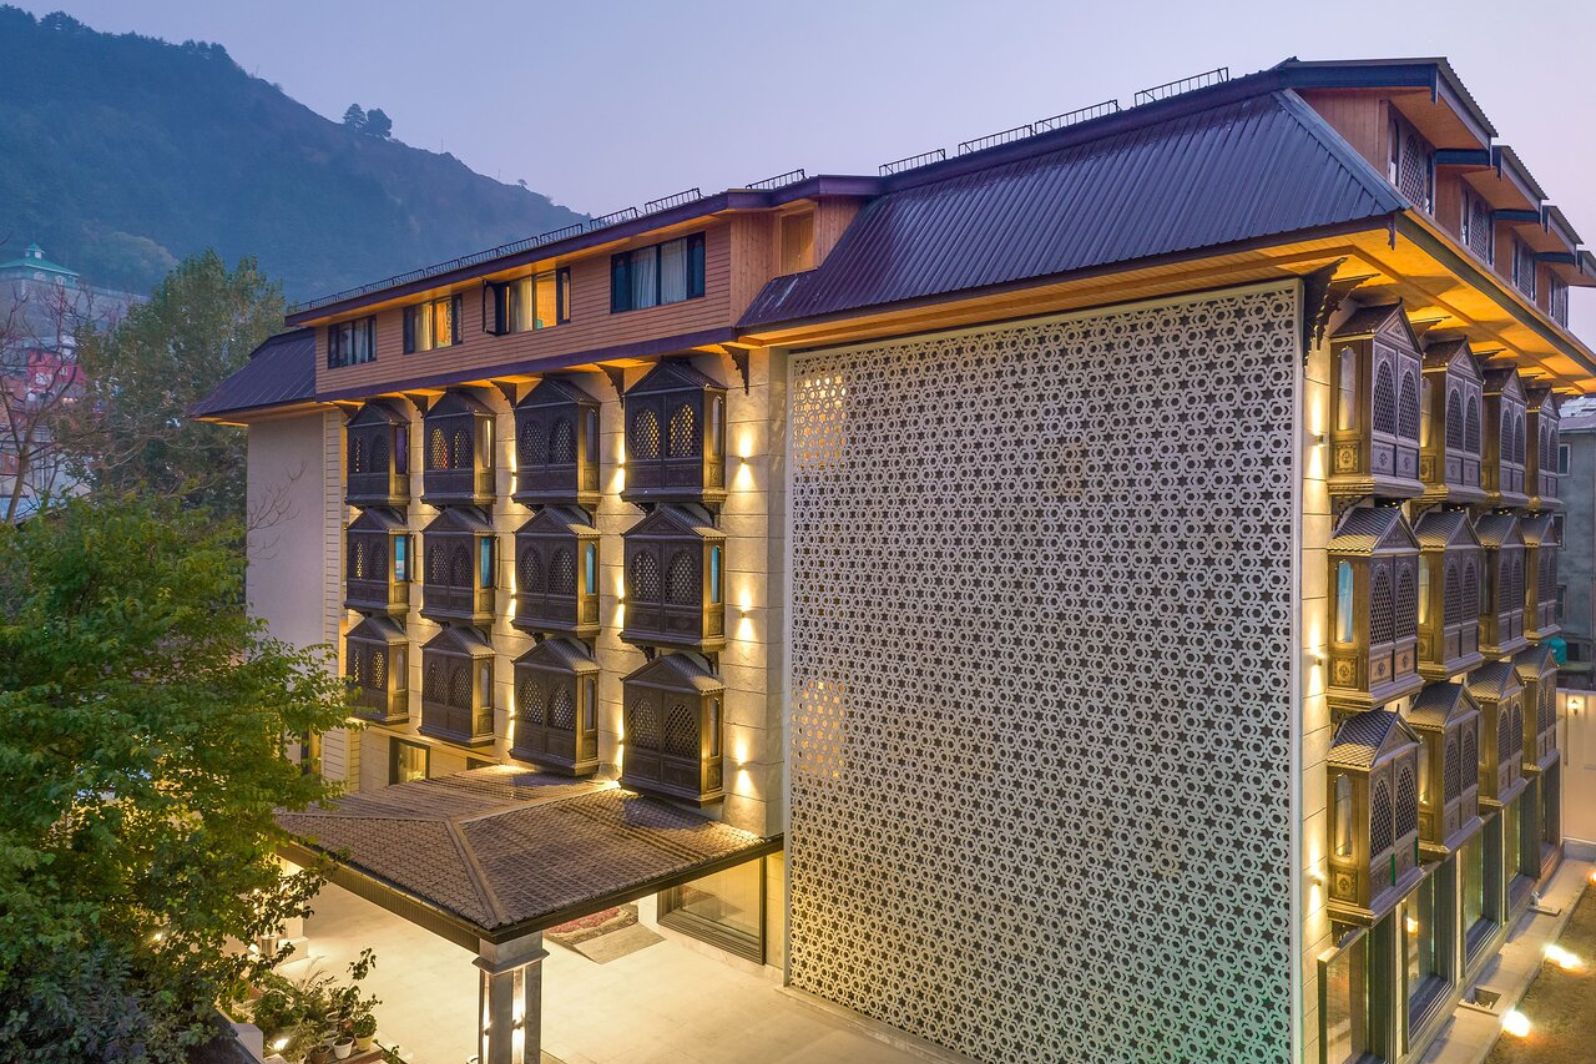 2 star hotels in srinagar